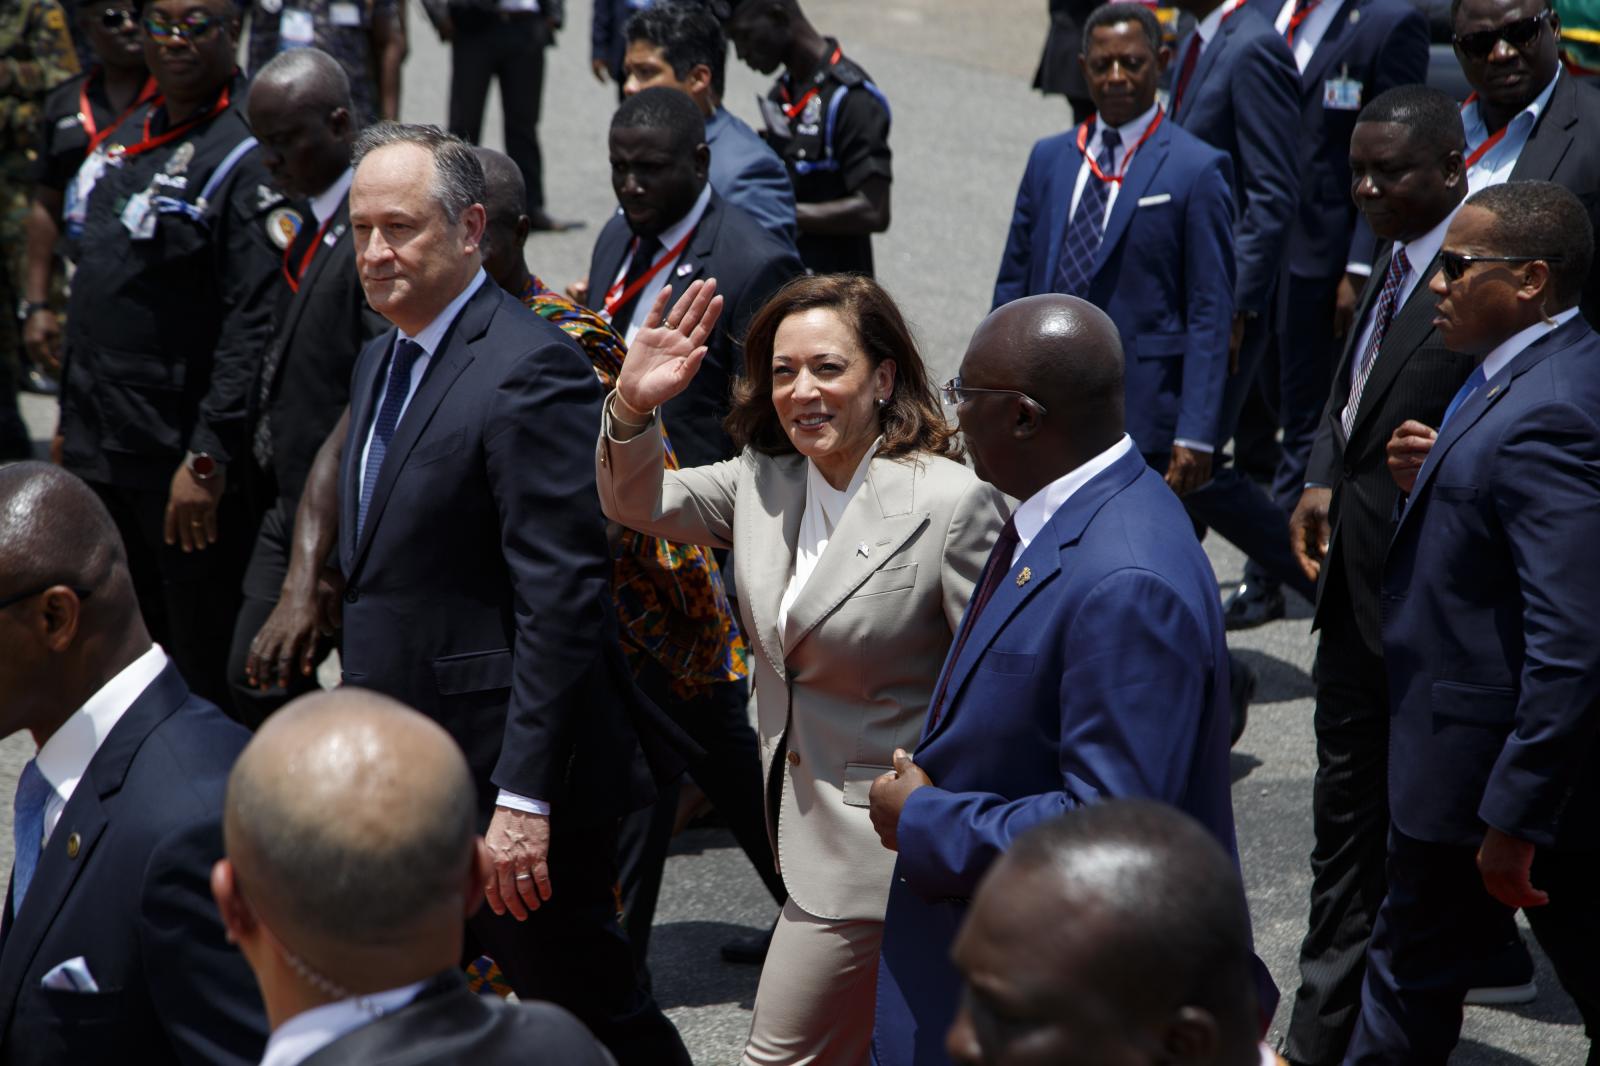 U.S. Vice President Kamala Harris Visit To Ghana - U.S. Vice President Kamala Harris waves as she arrives in...